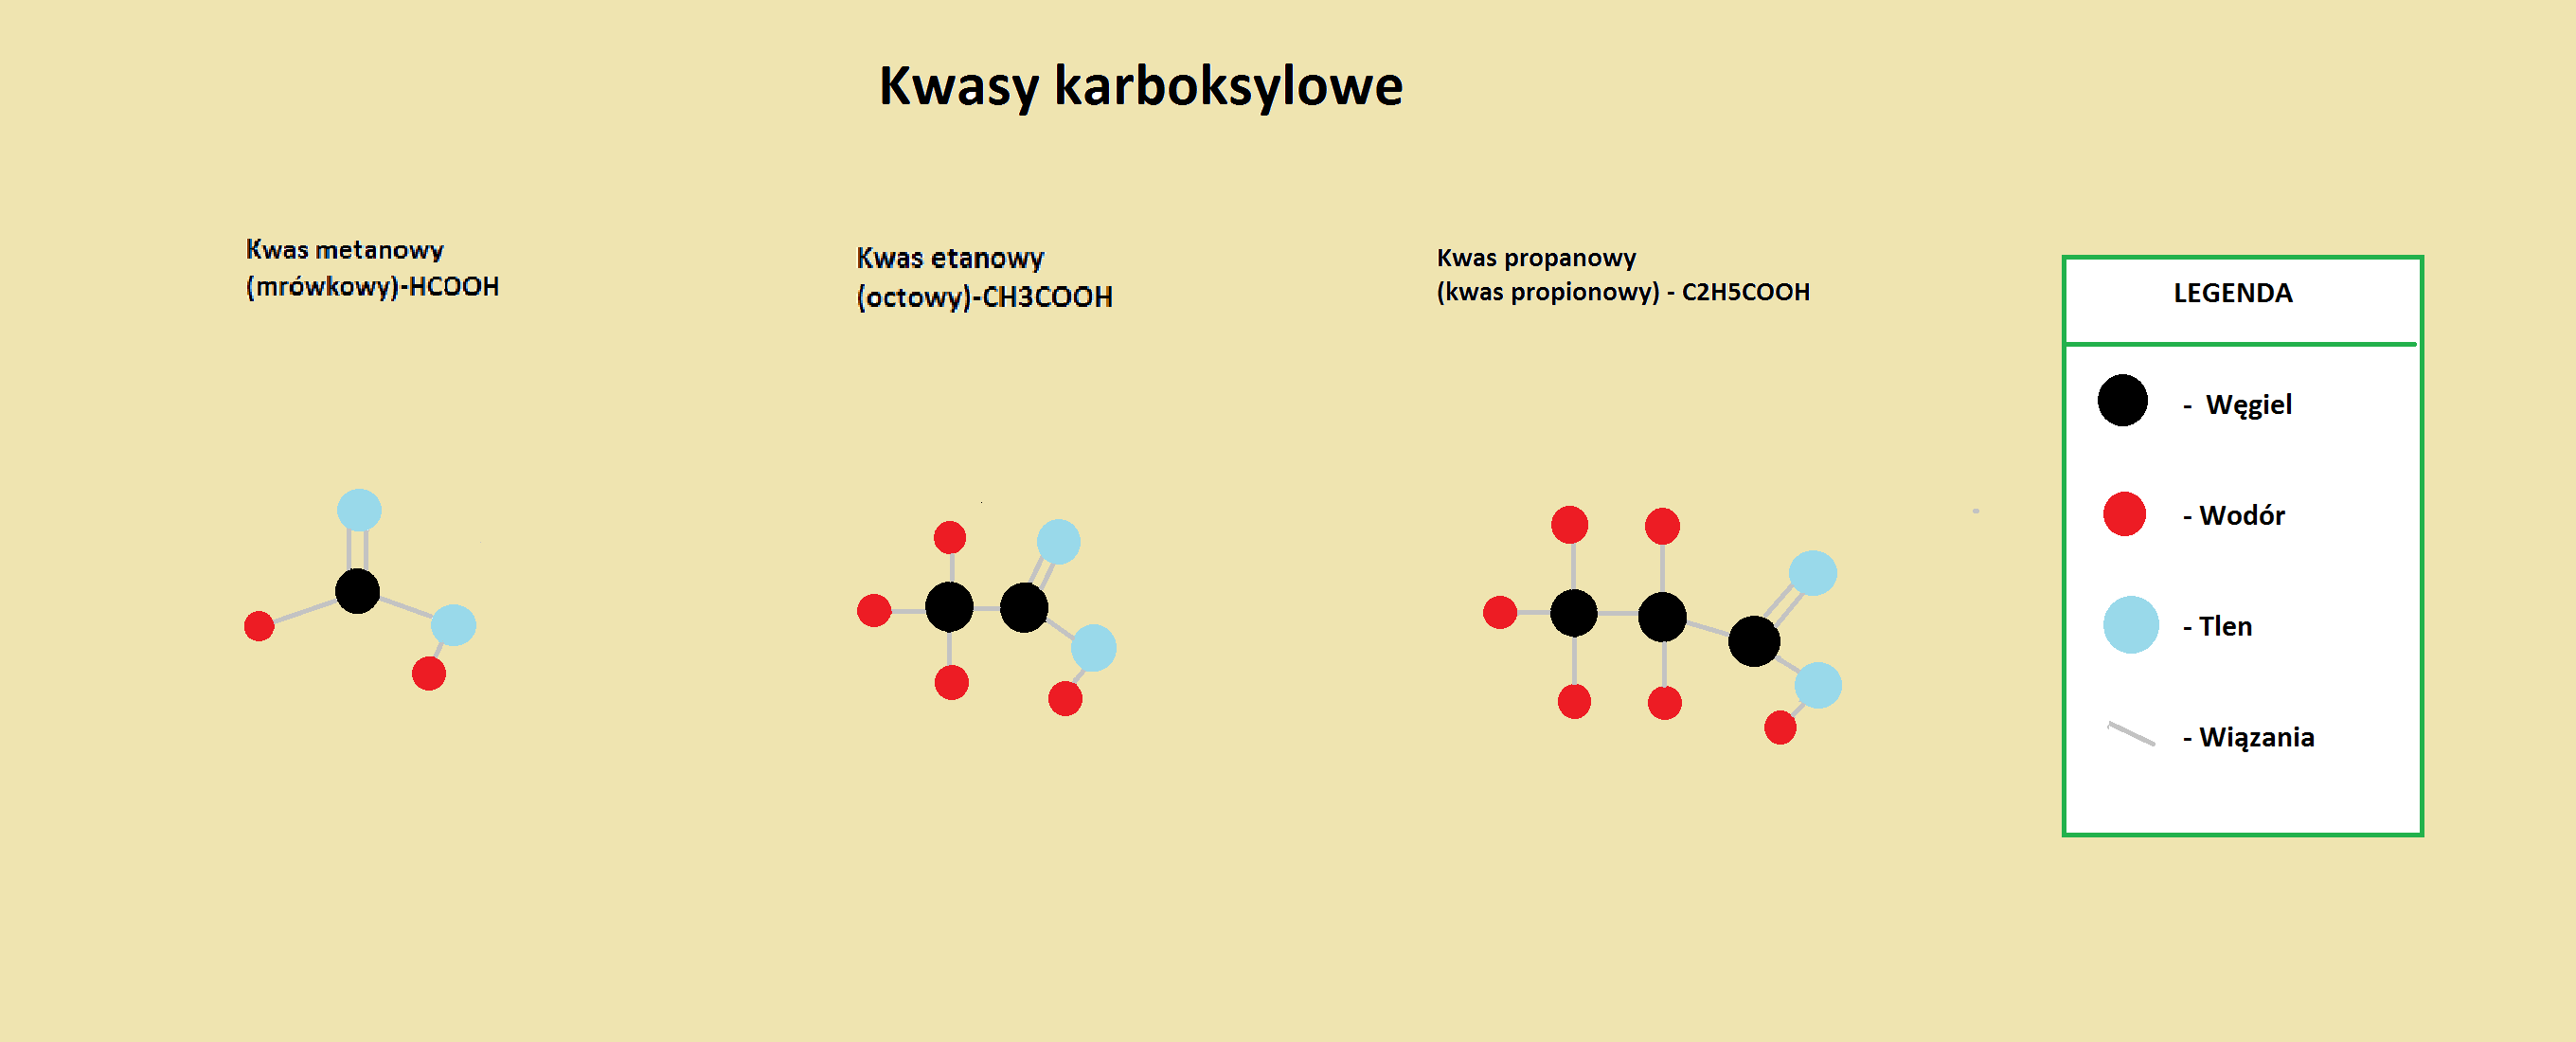 chemie_kwasy_karboksylowe (1).png